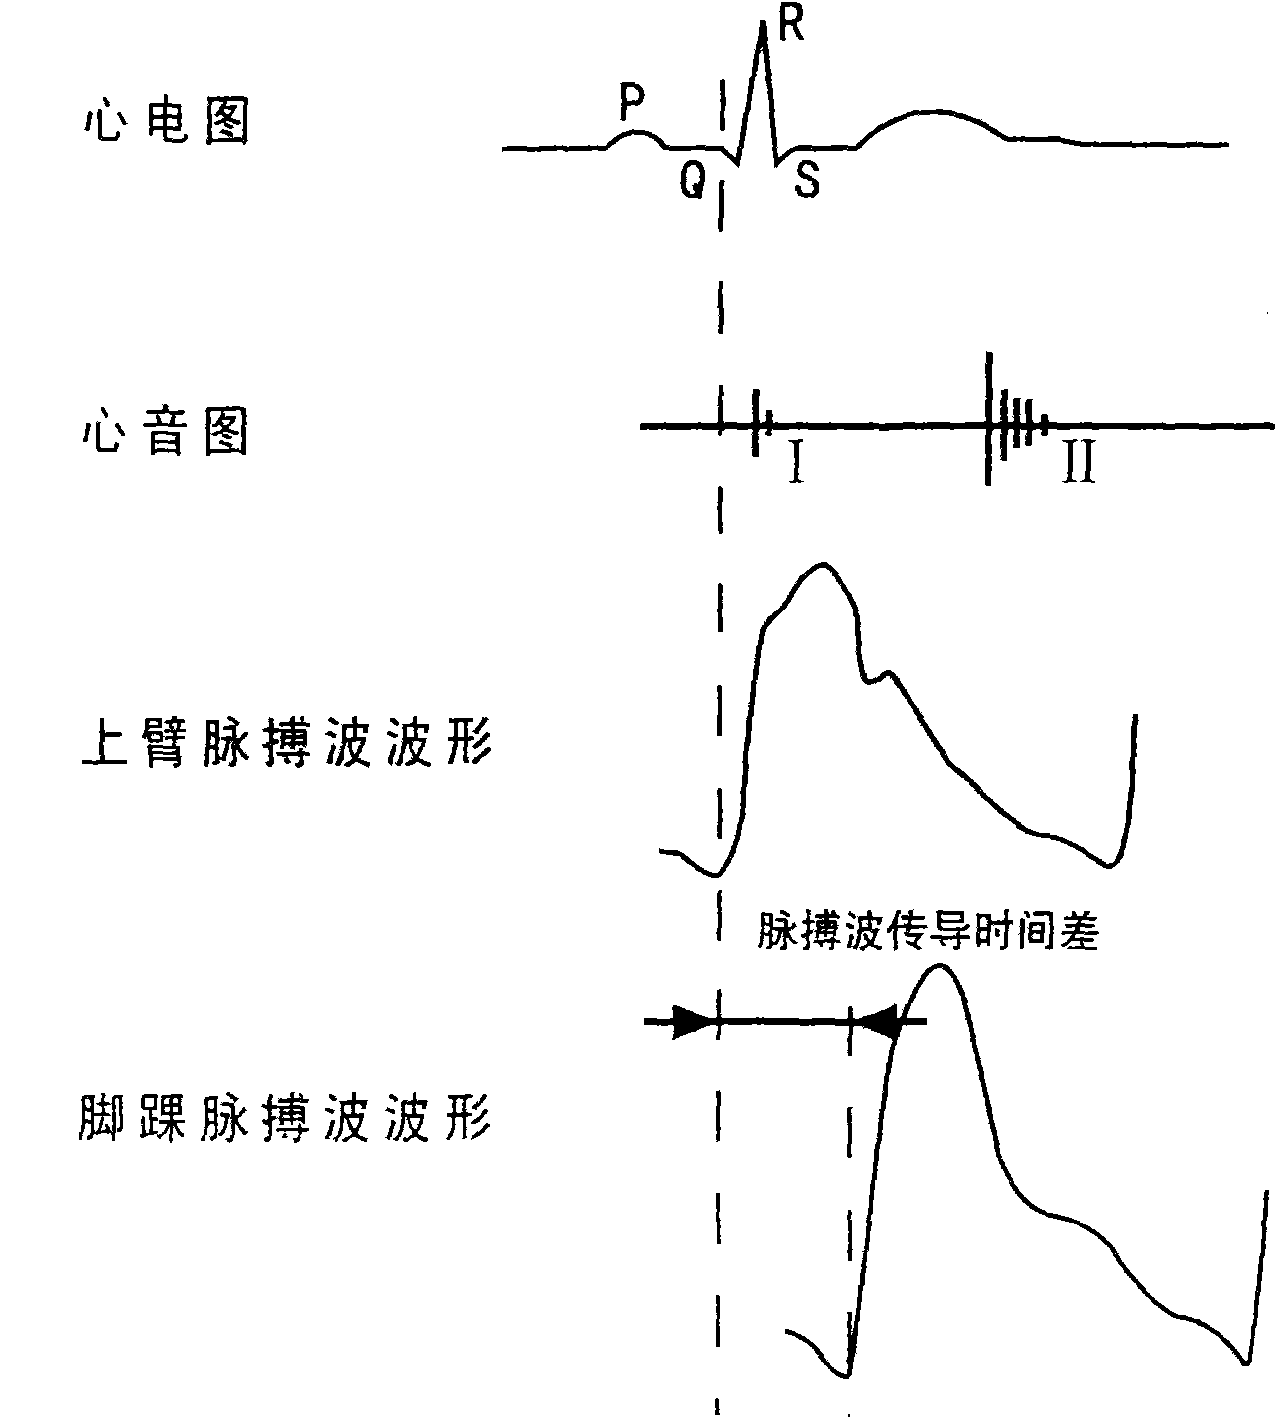 Pulse wave velocity computation method based on wavelet transform